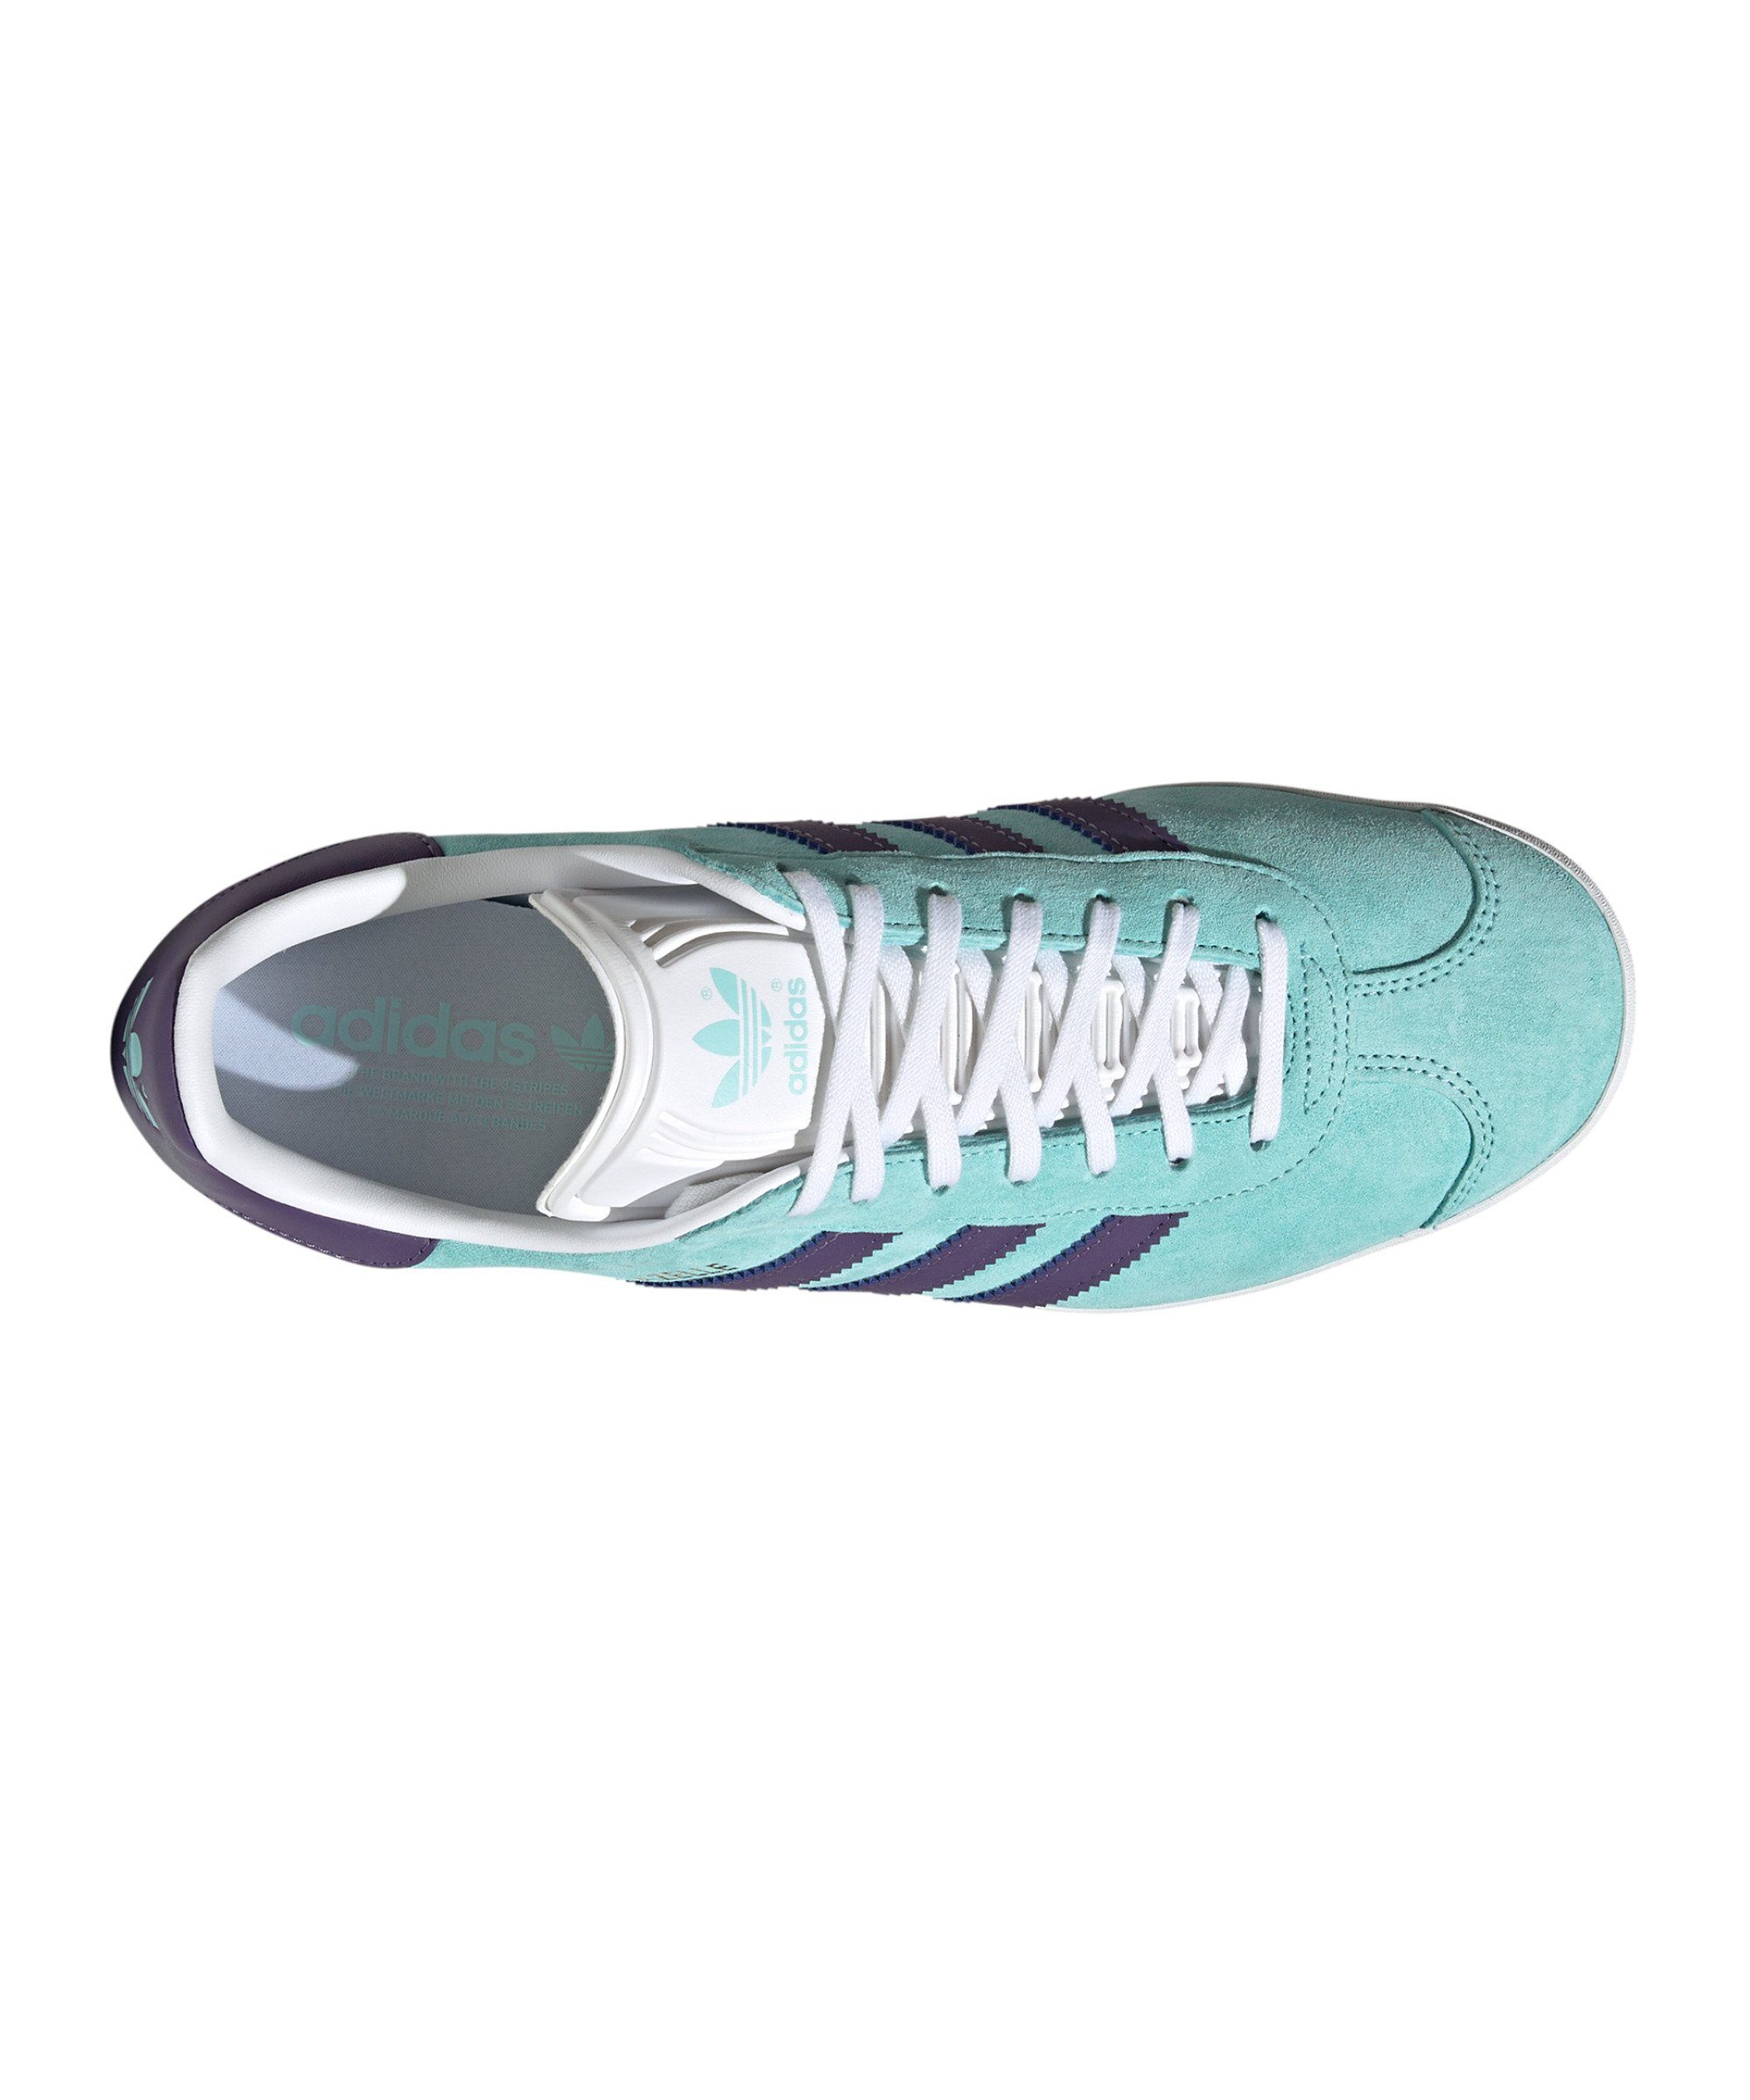 Gazelle tuerkislilaweiss Sneaker Originals adidas